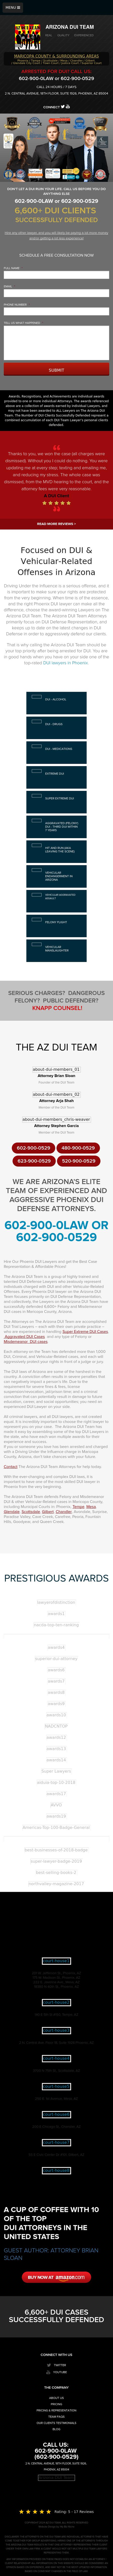 The Arizona DUI Team - Phoenix AZ Lawyers